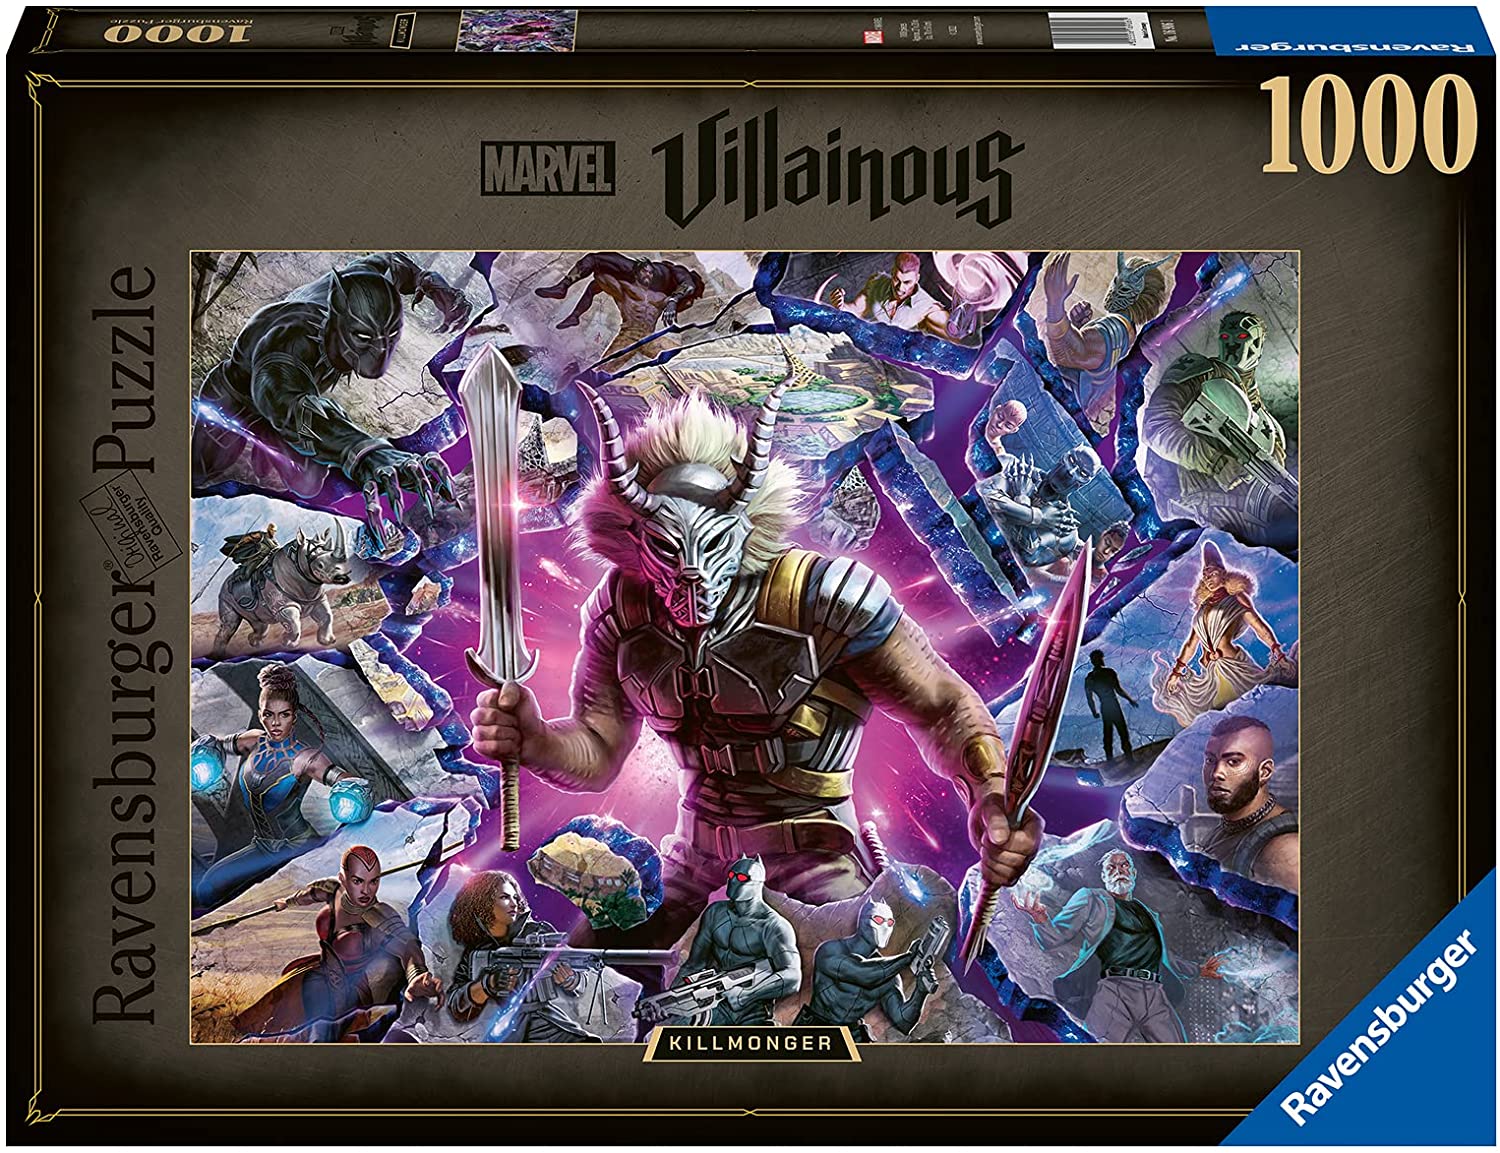 Disney Villainous - Killmonger (1000 pc puzzle)